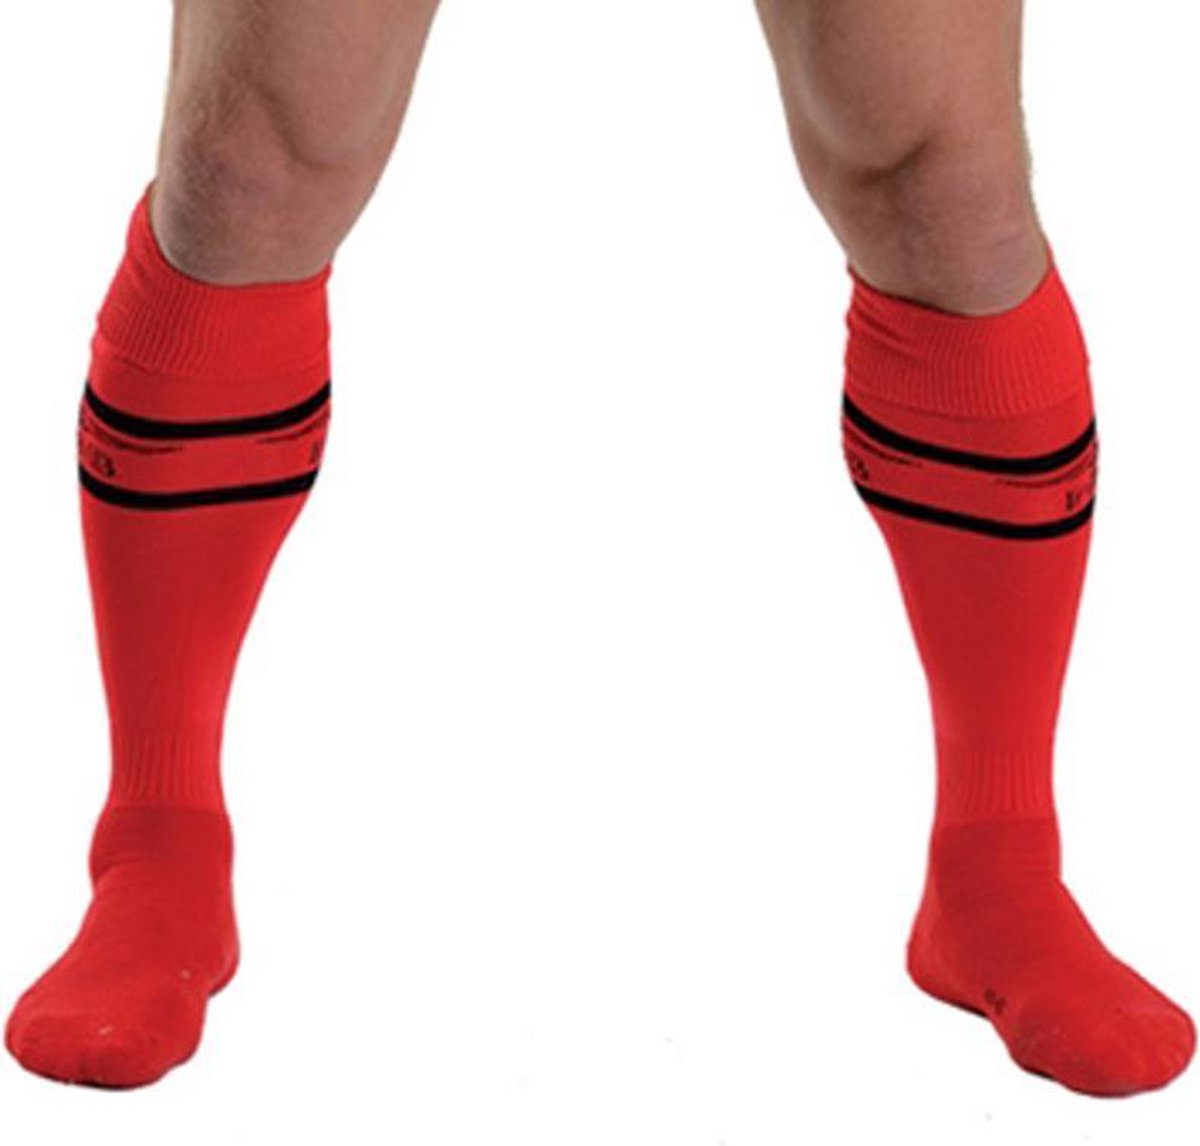 Mister b urban football socks with pocket red 38-41